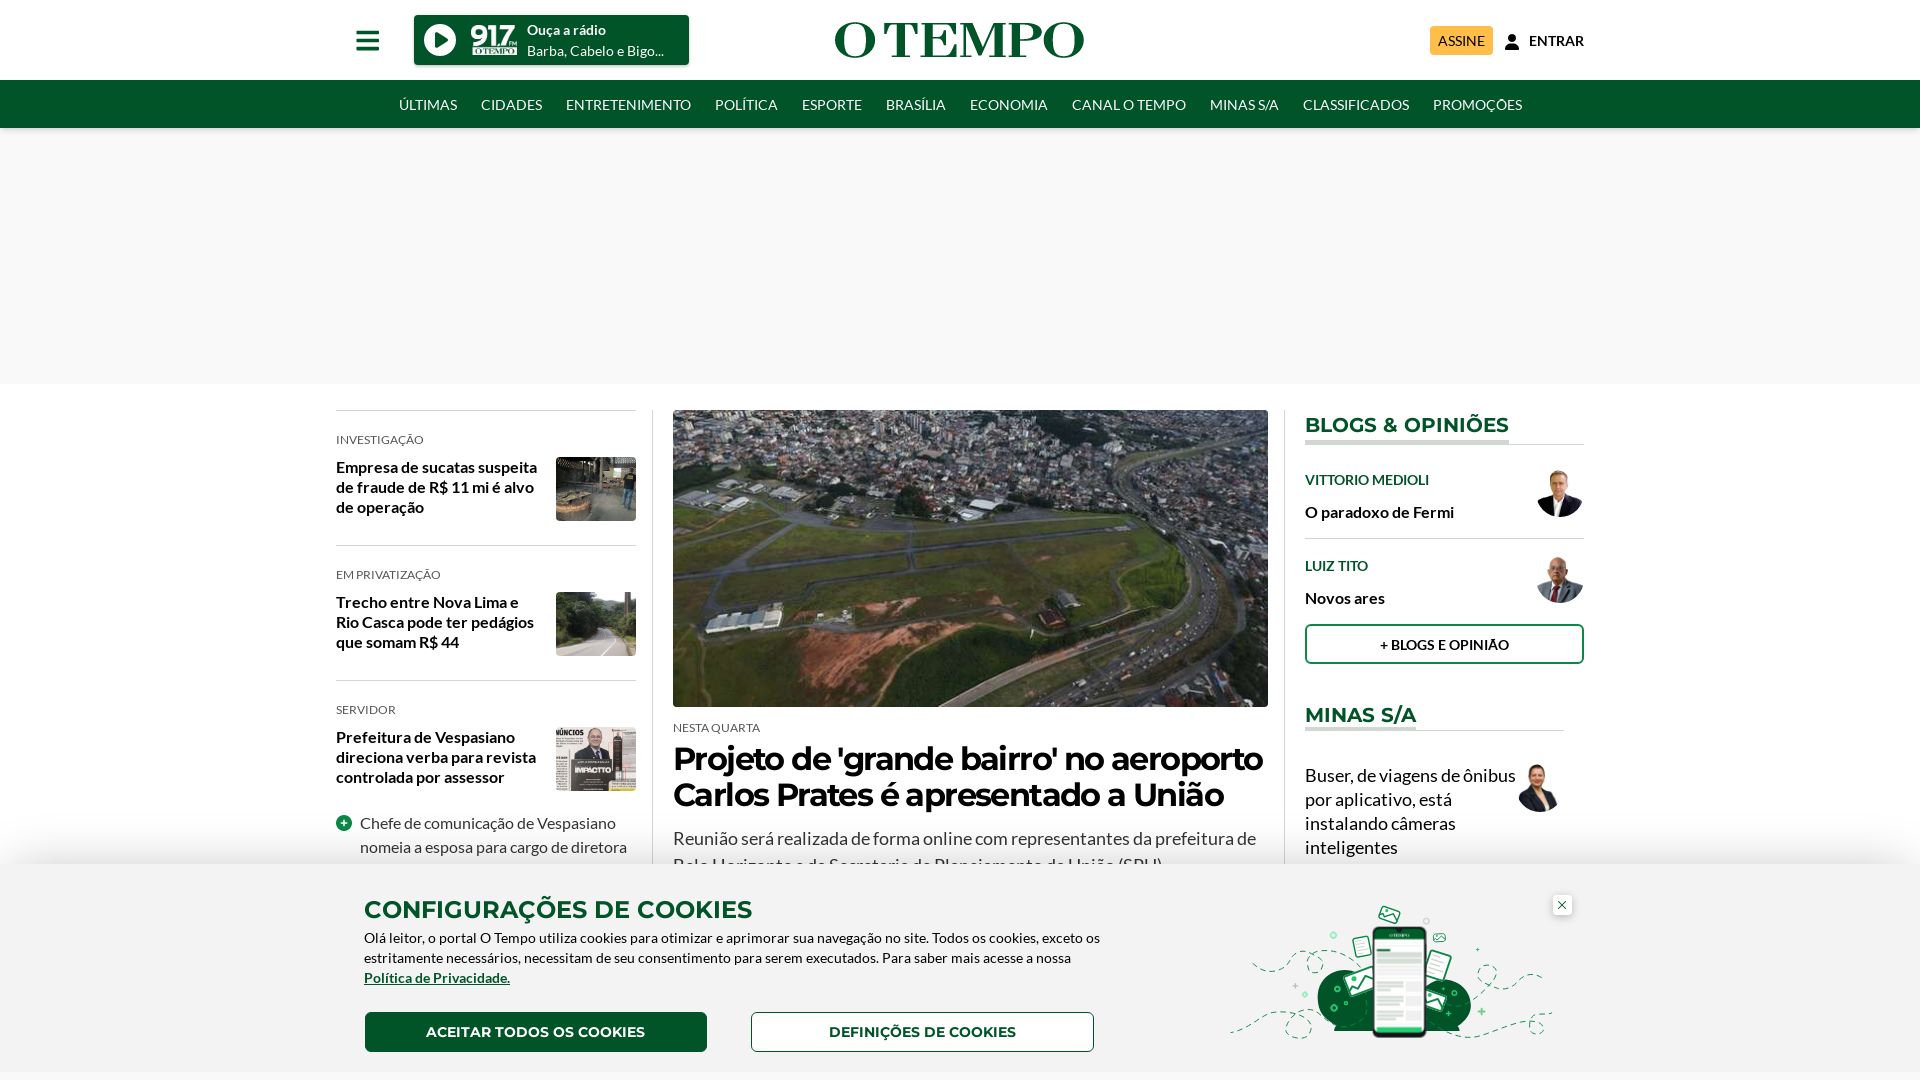 Website status otempo.com.br is   ONLINE